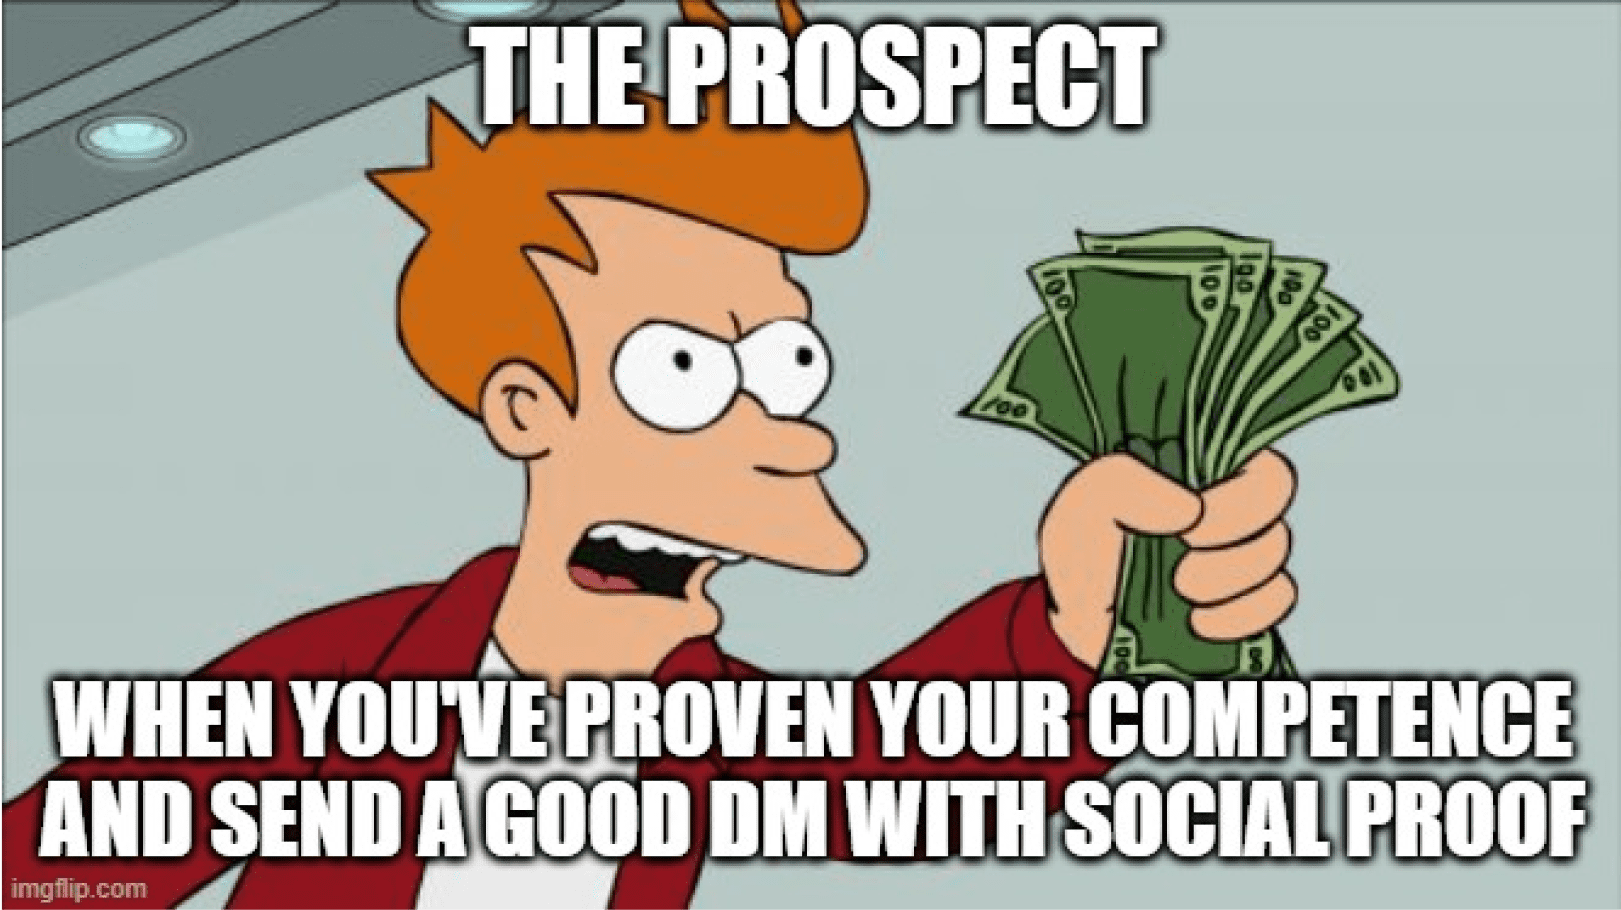 Add Social Proof